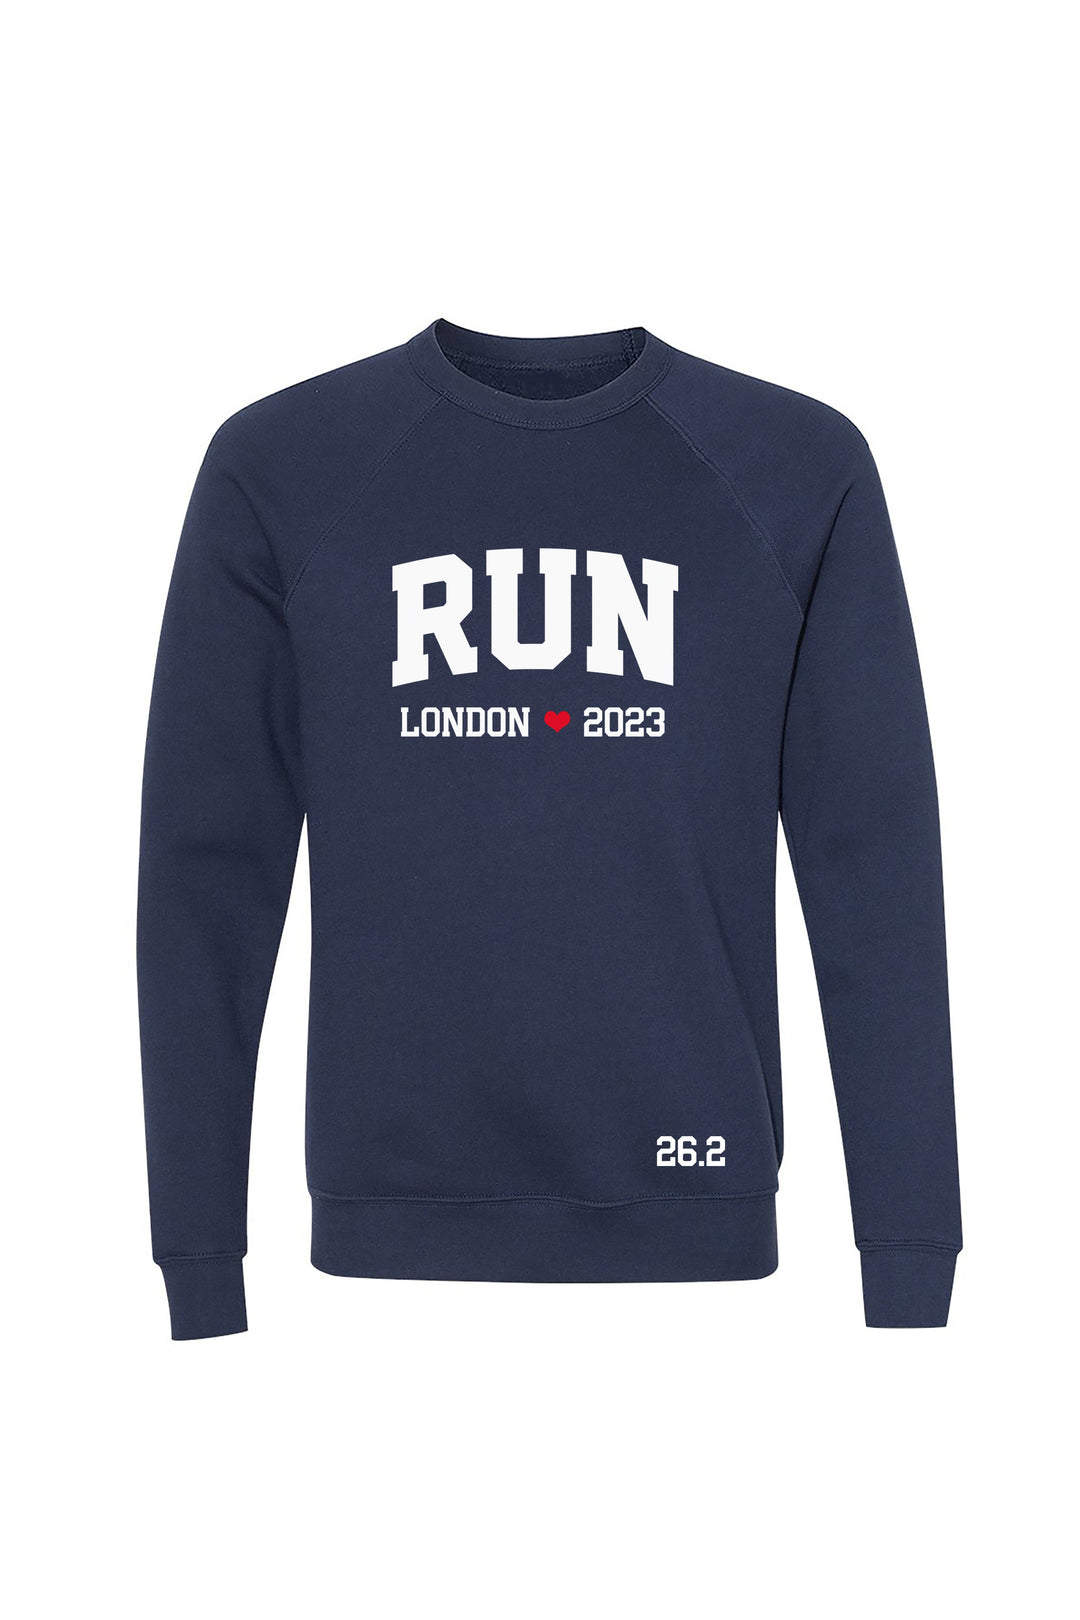 Sarah Marie Design Studio Sweatshirt XSmall / Navy RUN London 2023 Marathon Sweatshirt